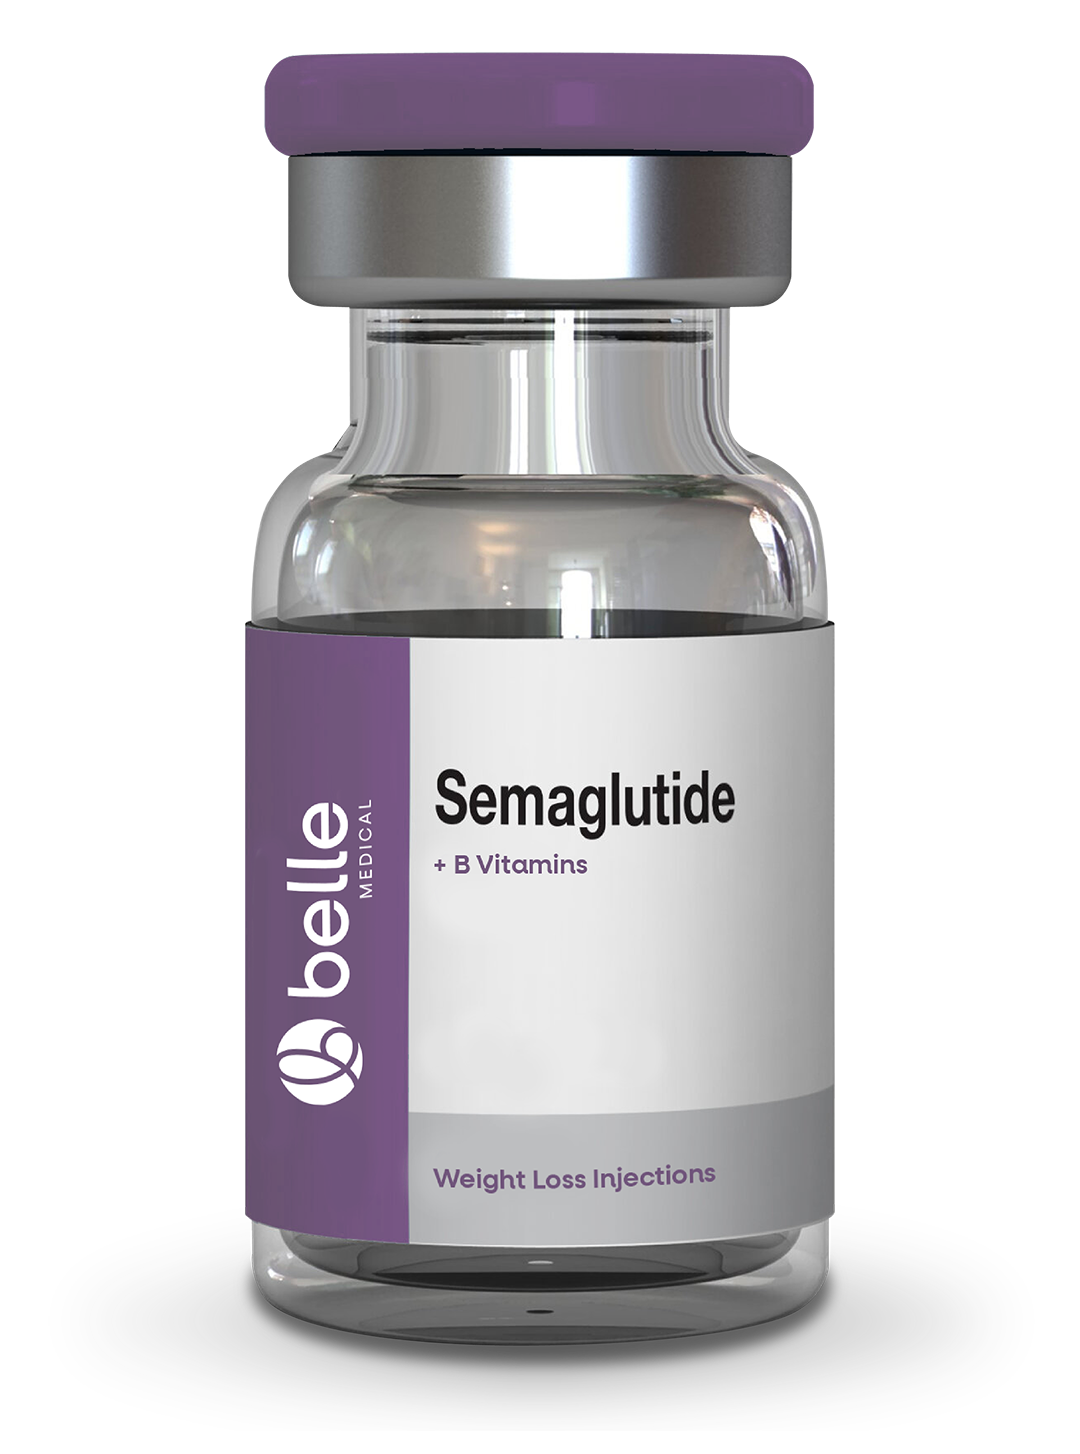 A vial of Semaglutide weight loss medication.